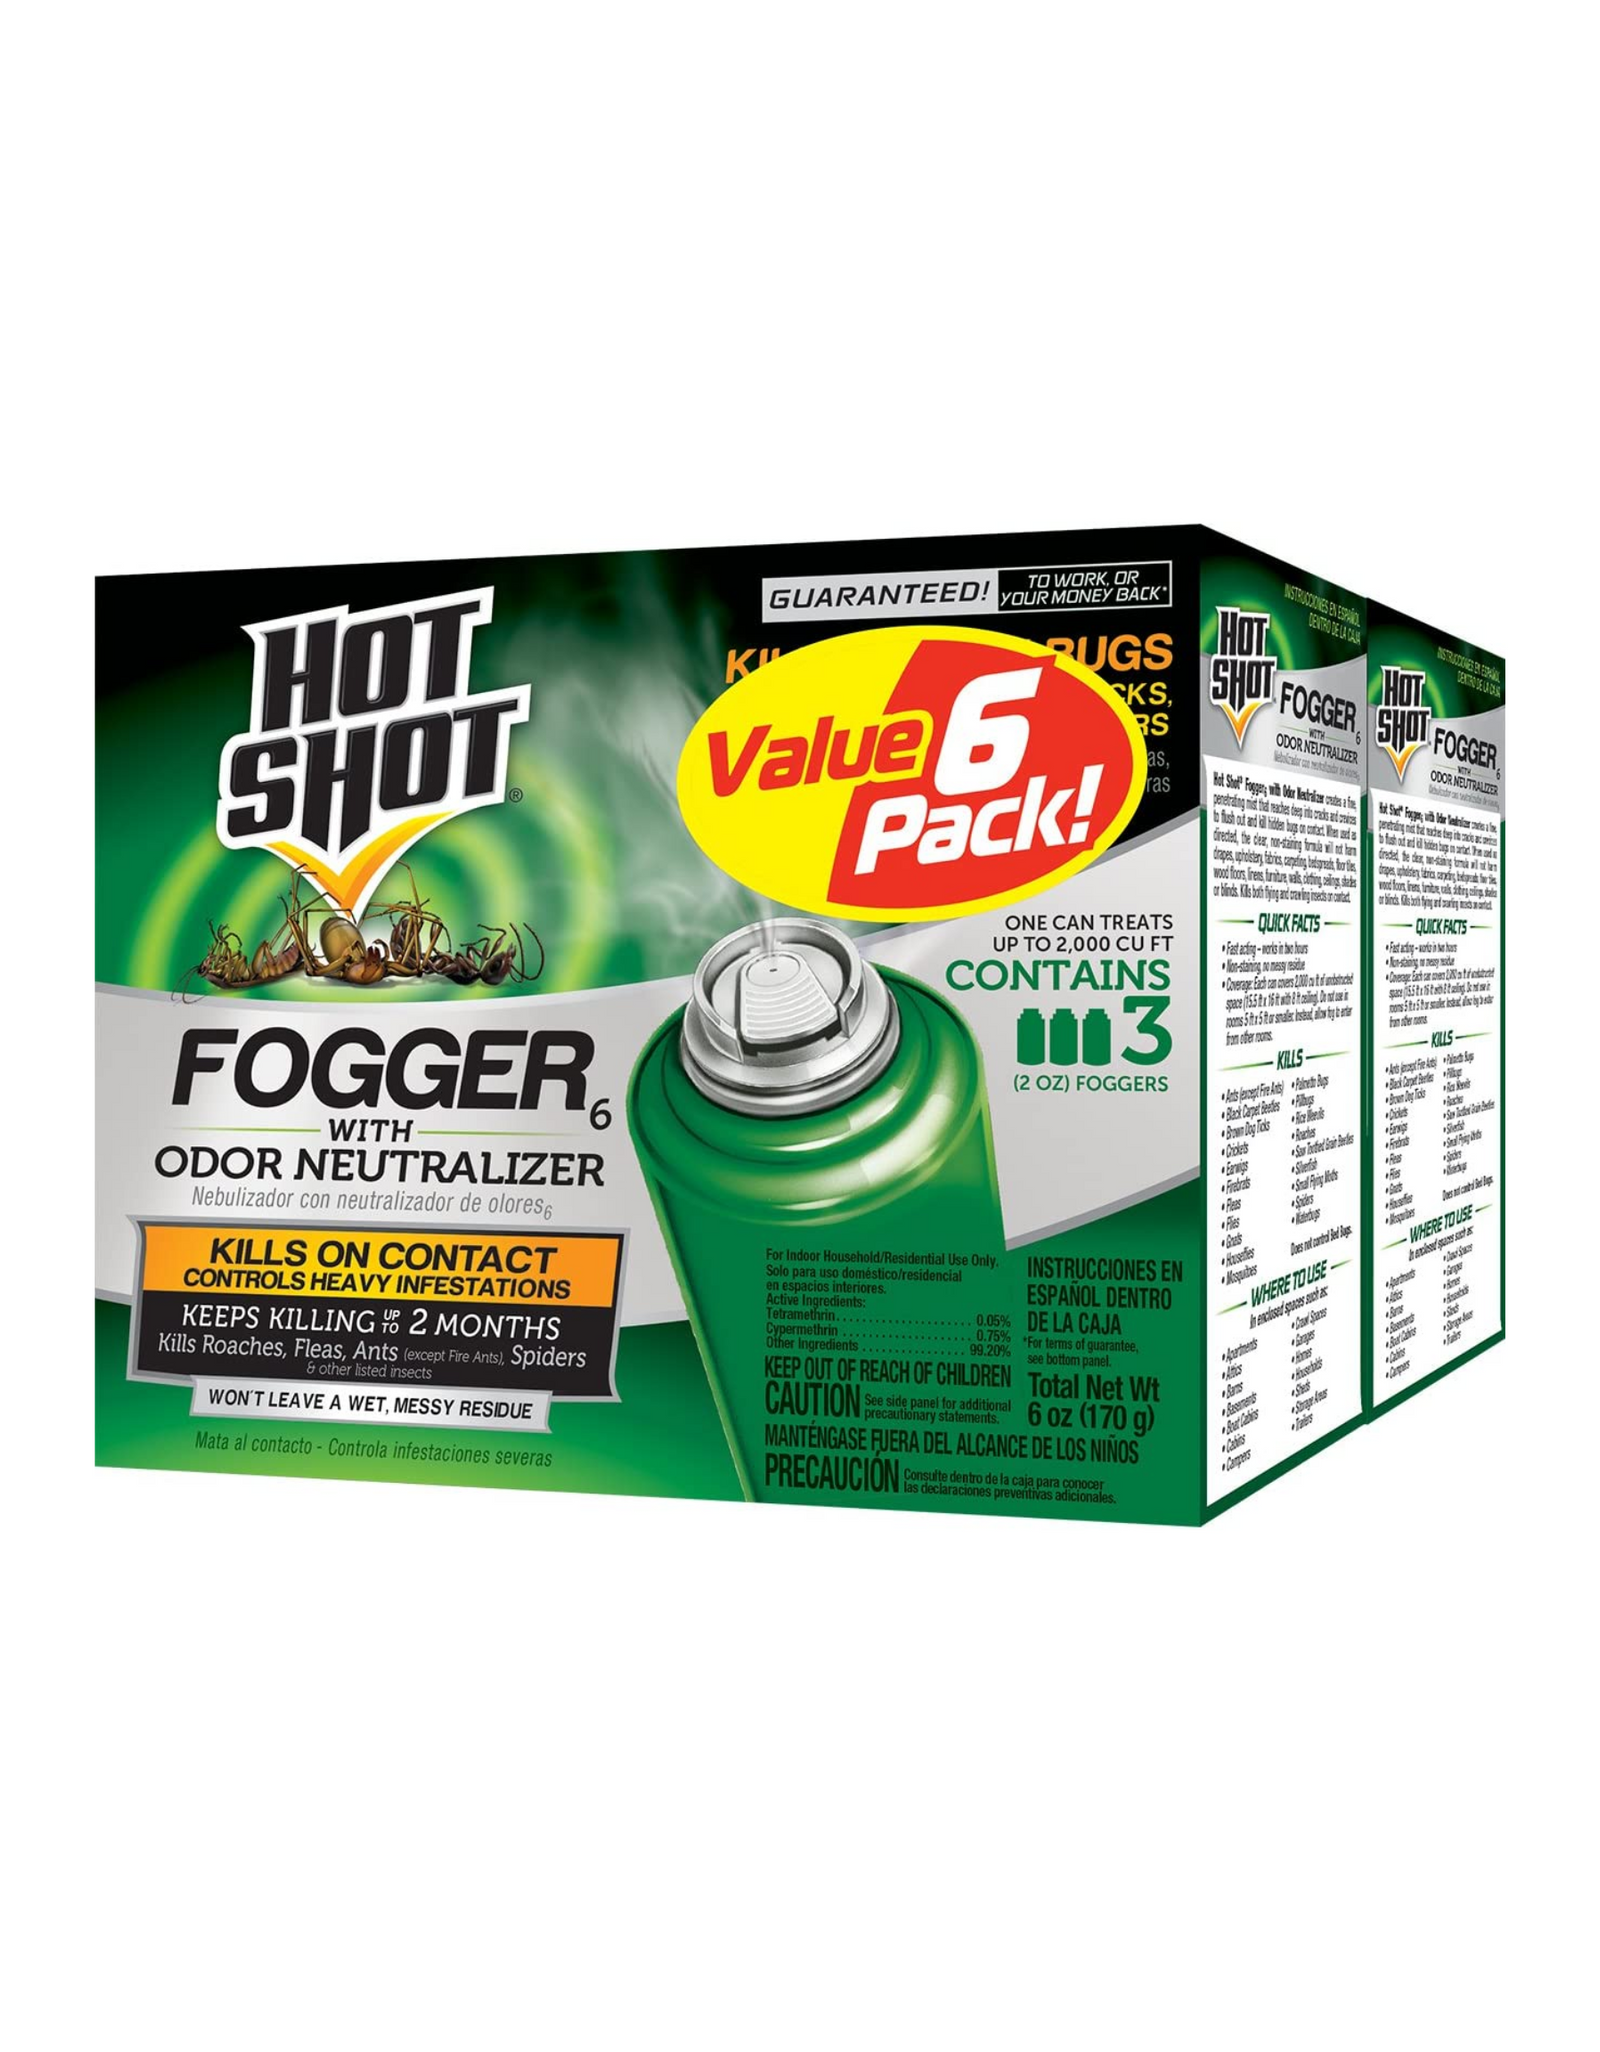 Hot ShotHot Shot Fogger6 With Odor Neutralizer, 5 Oz, 2 Pack